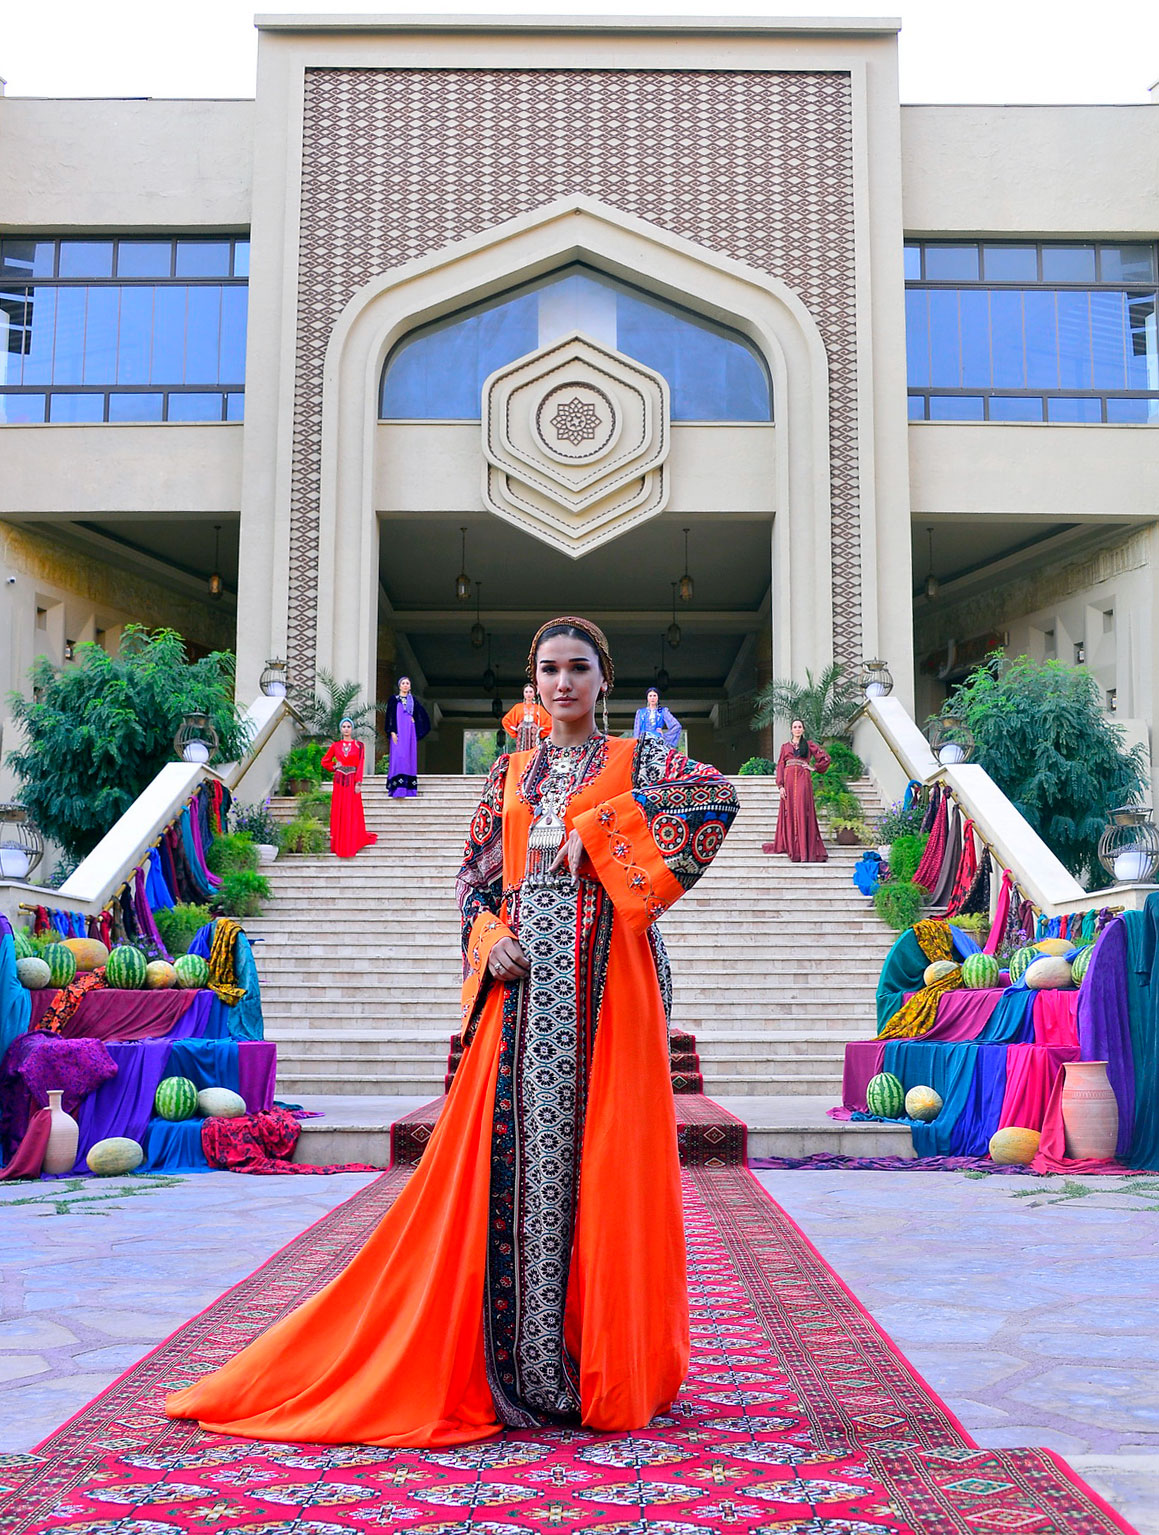 Türkmenistanyň paýtagtynda «Moda hepdeligi -2022» geçirilýär